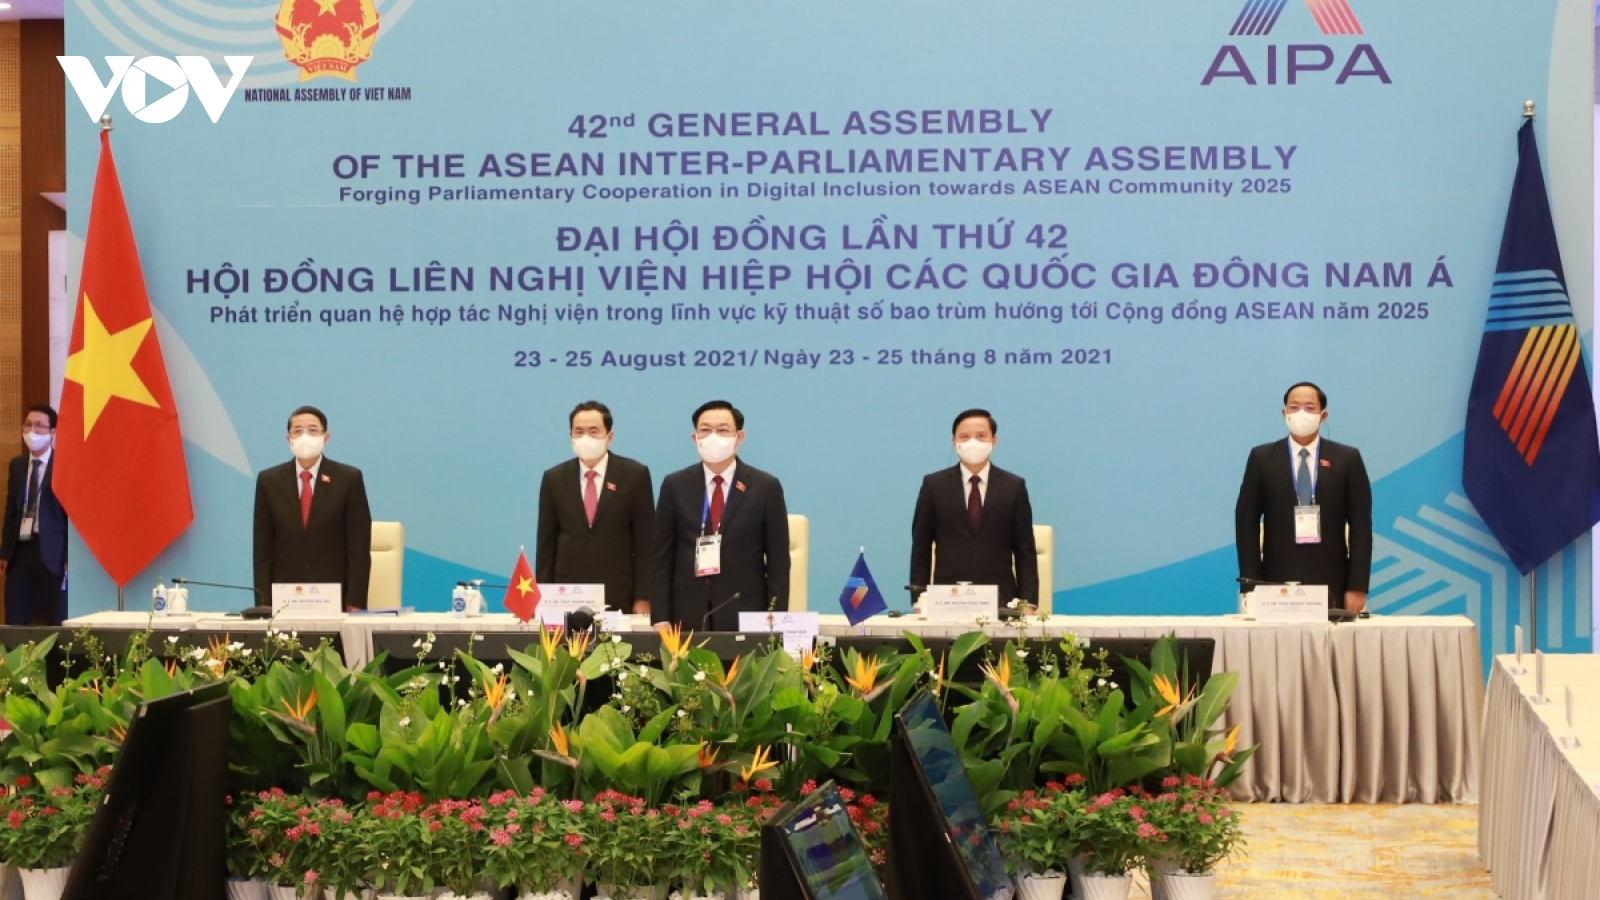 Vietnam officially attends AIPA-42 via online format